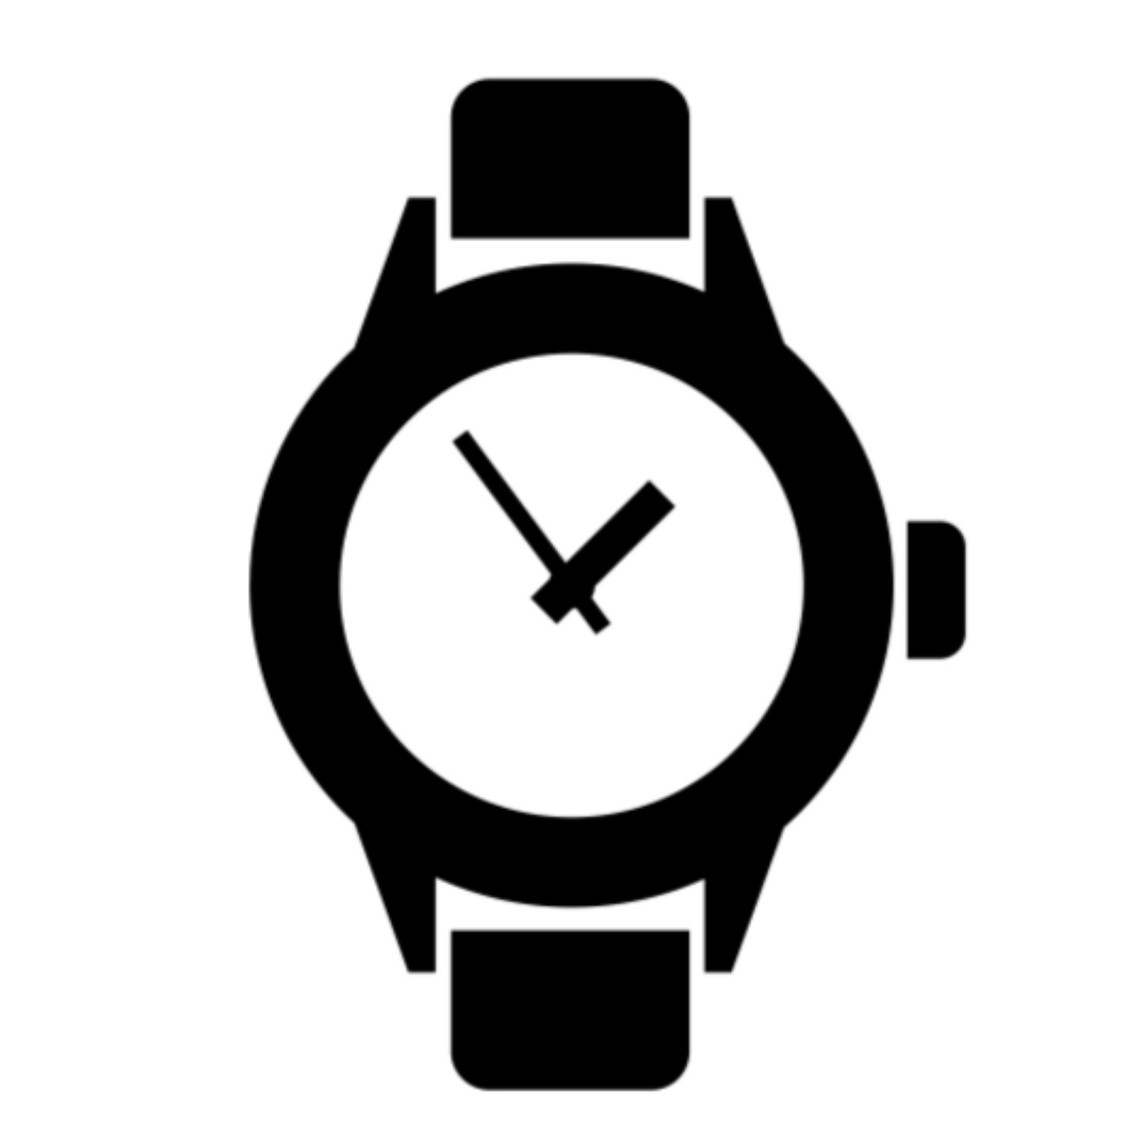 Логотипы наручных часов. Иконка часы наручные. Пиктограмма часы наручные. Часы логотип. Часы наручные вектор.